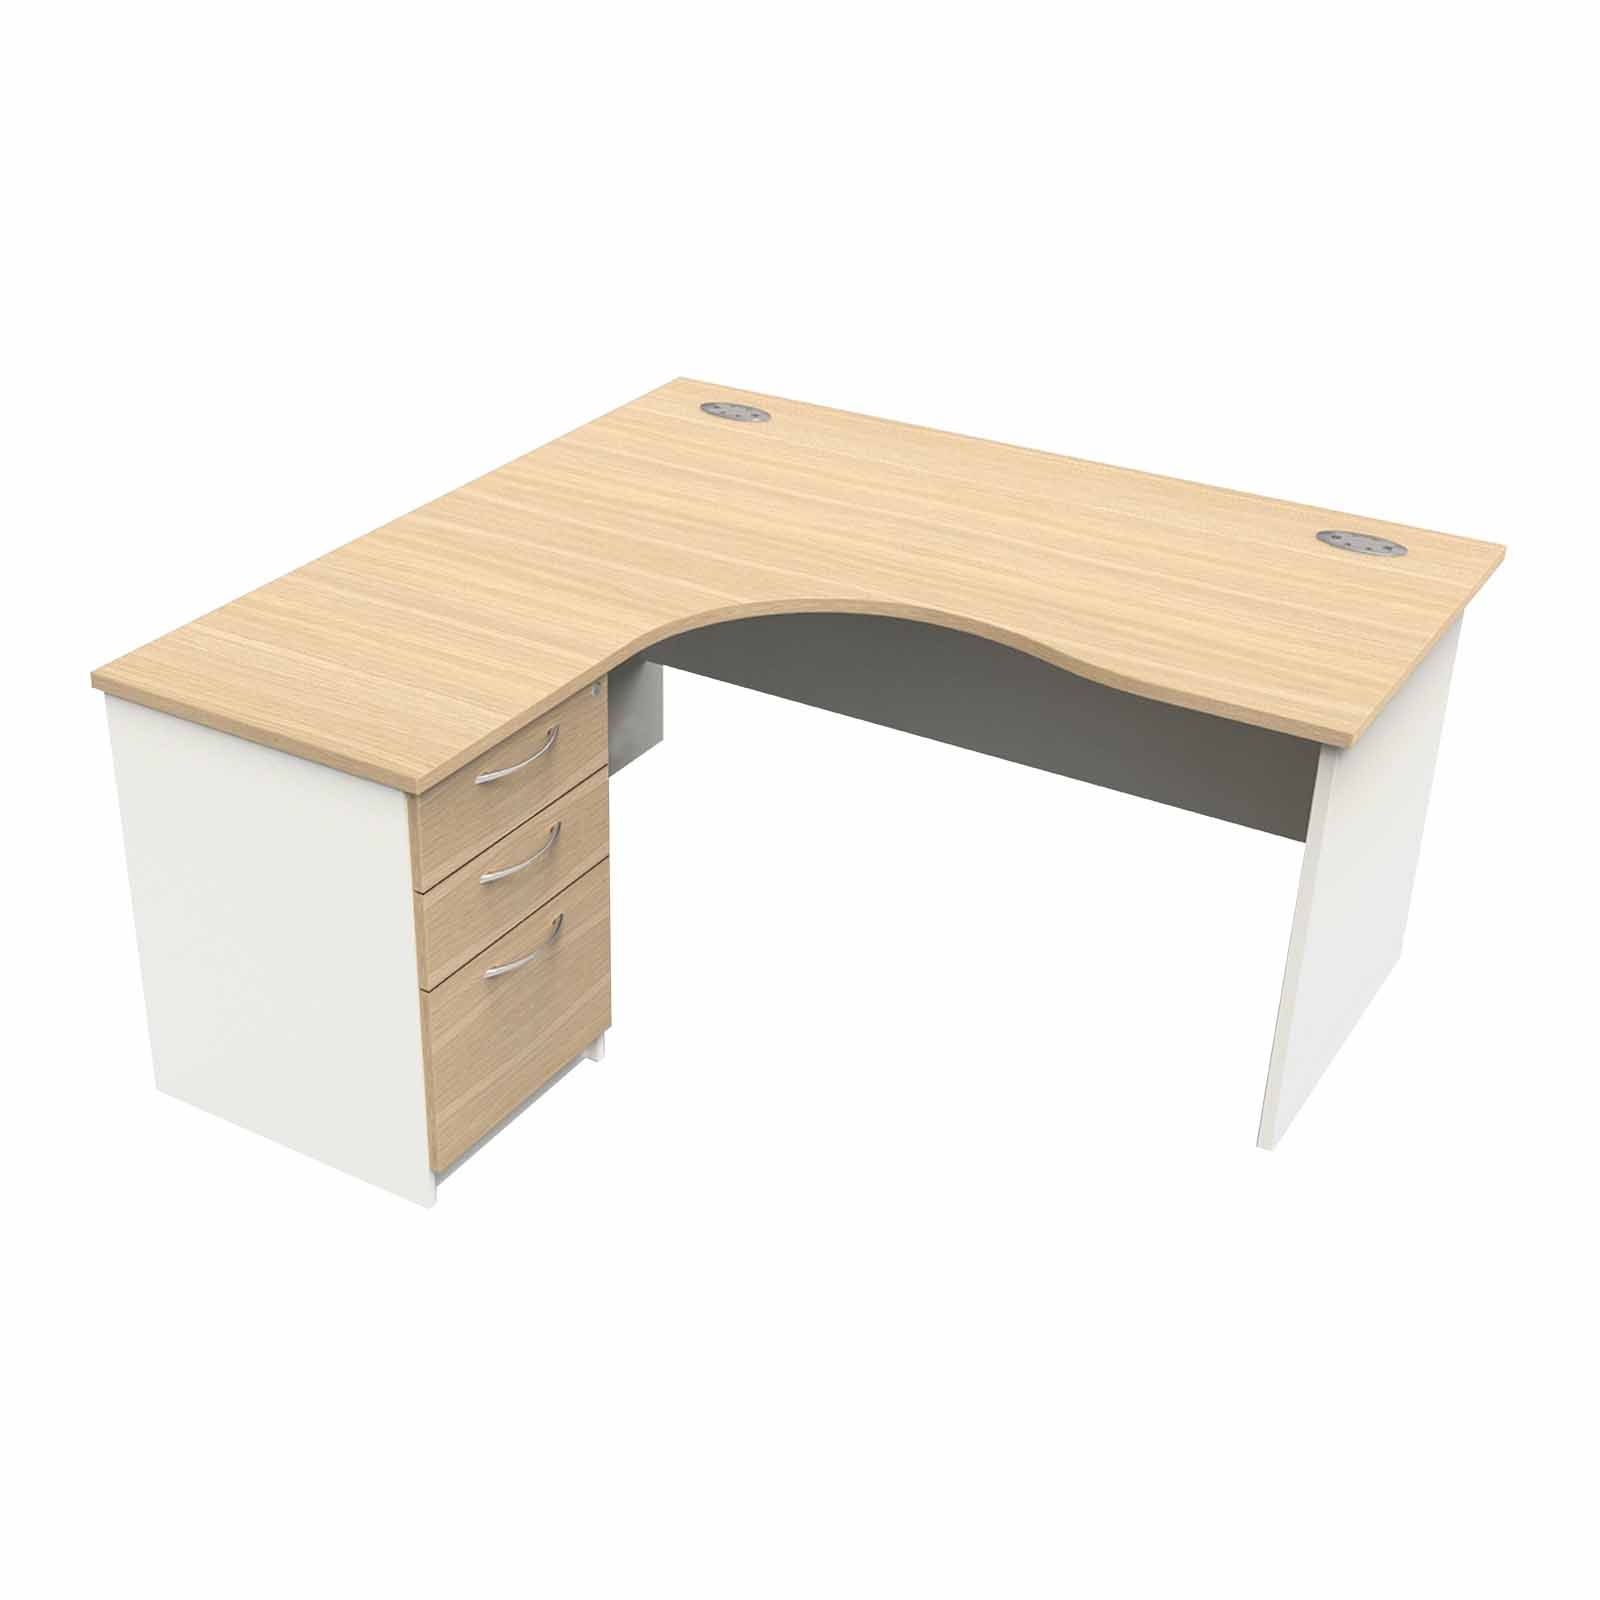 MADE TO ORDER Crescent panel end desk with pedestal